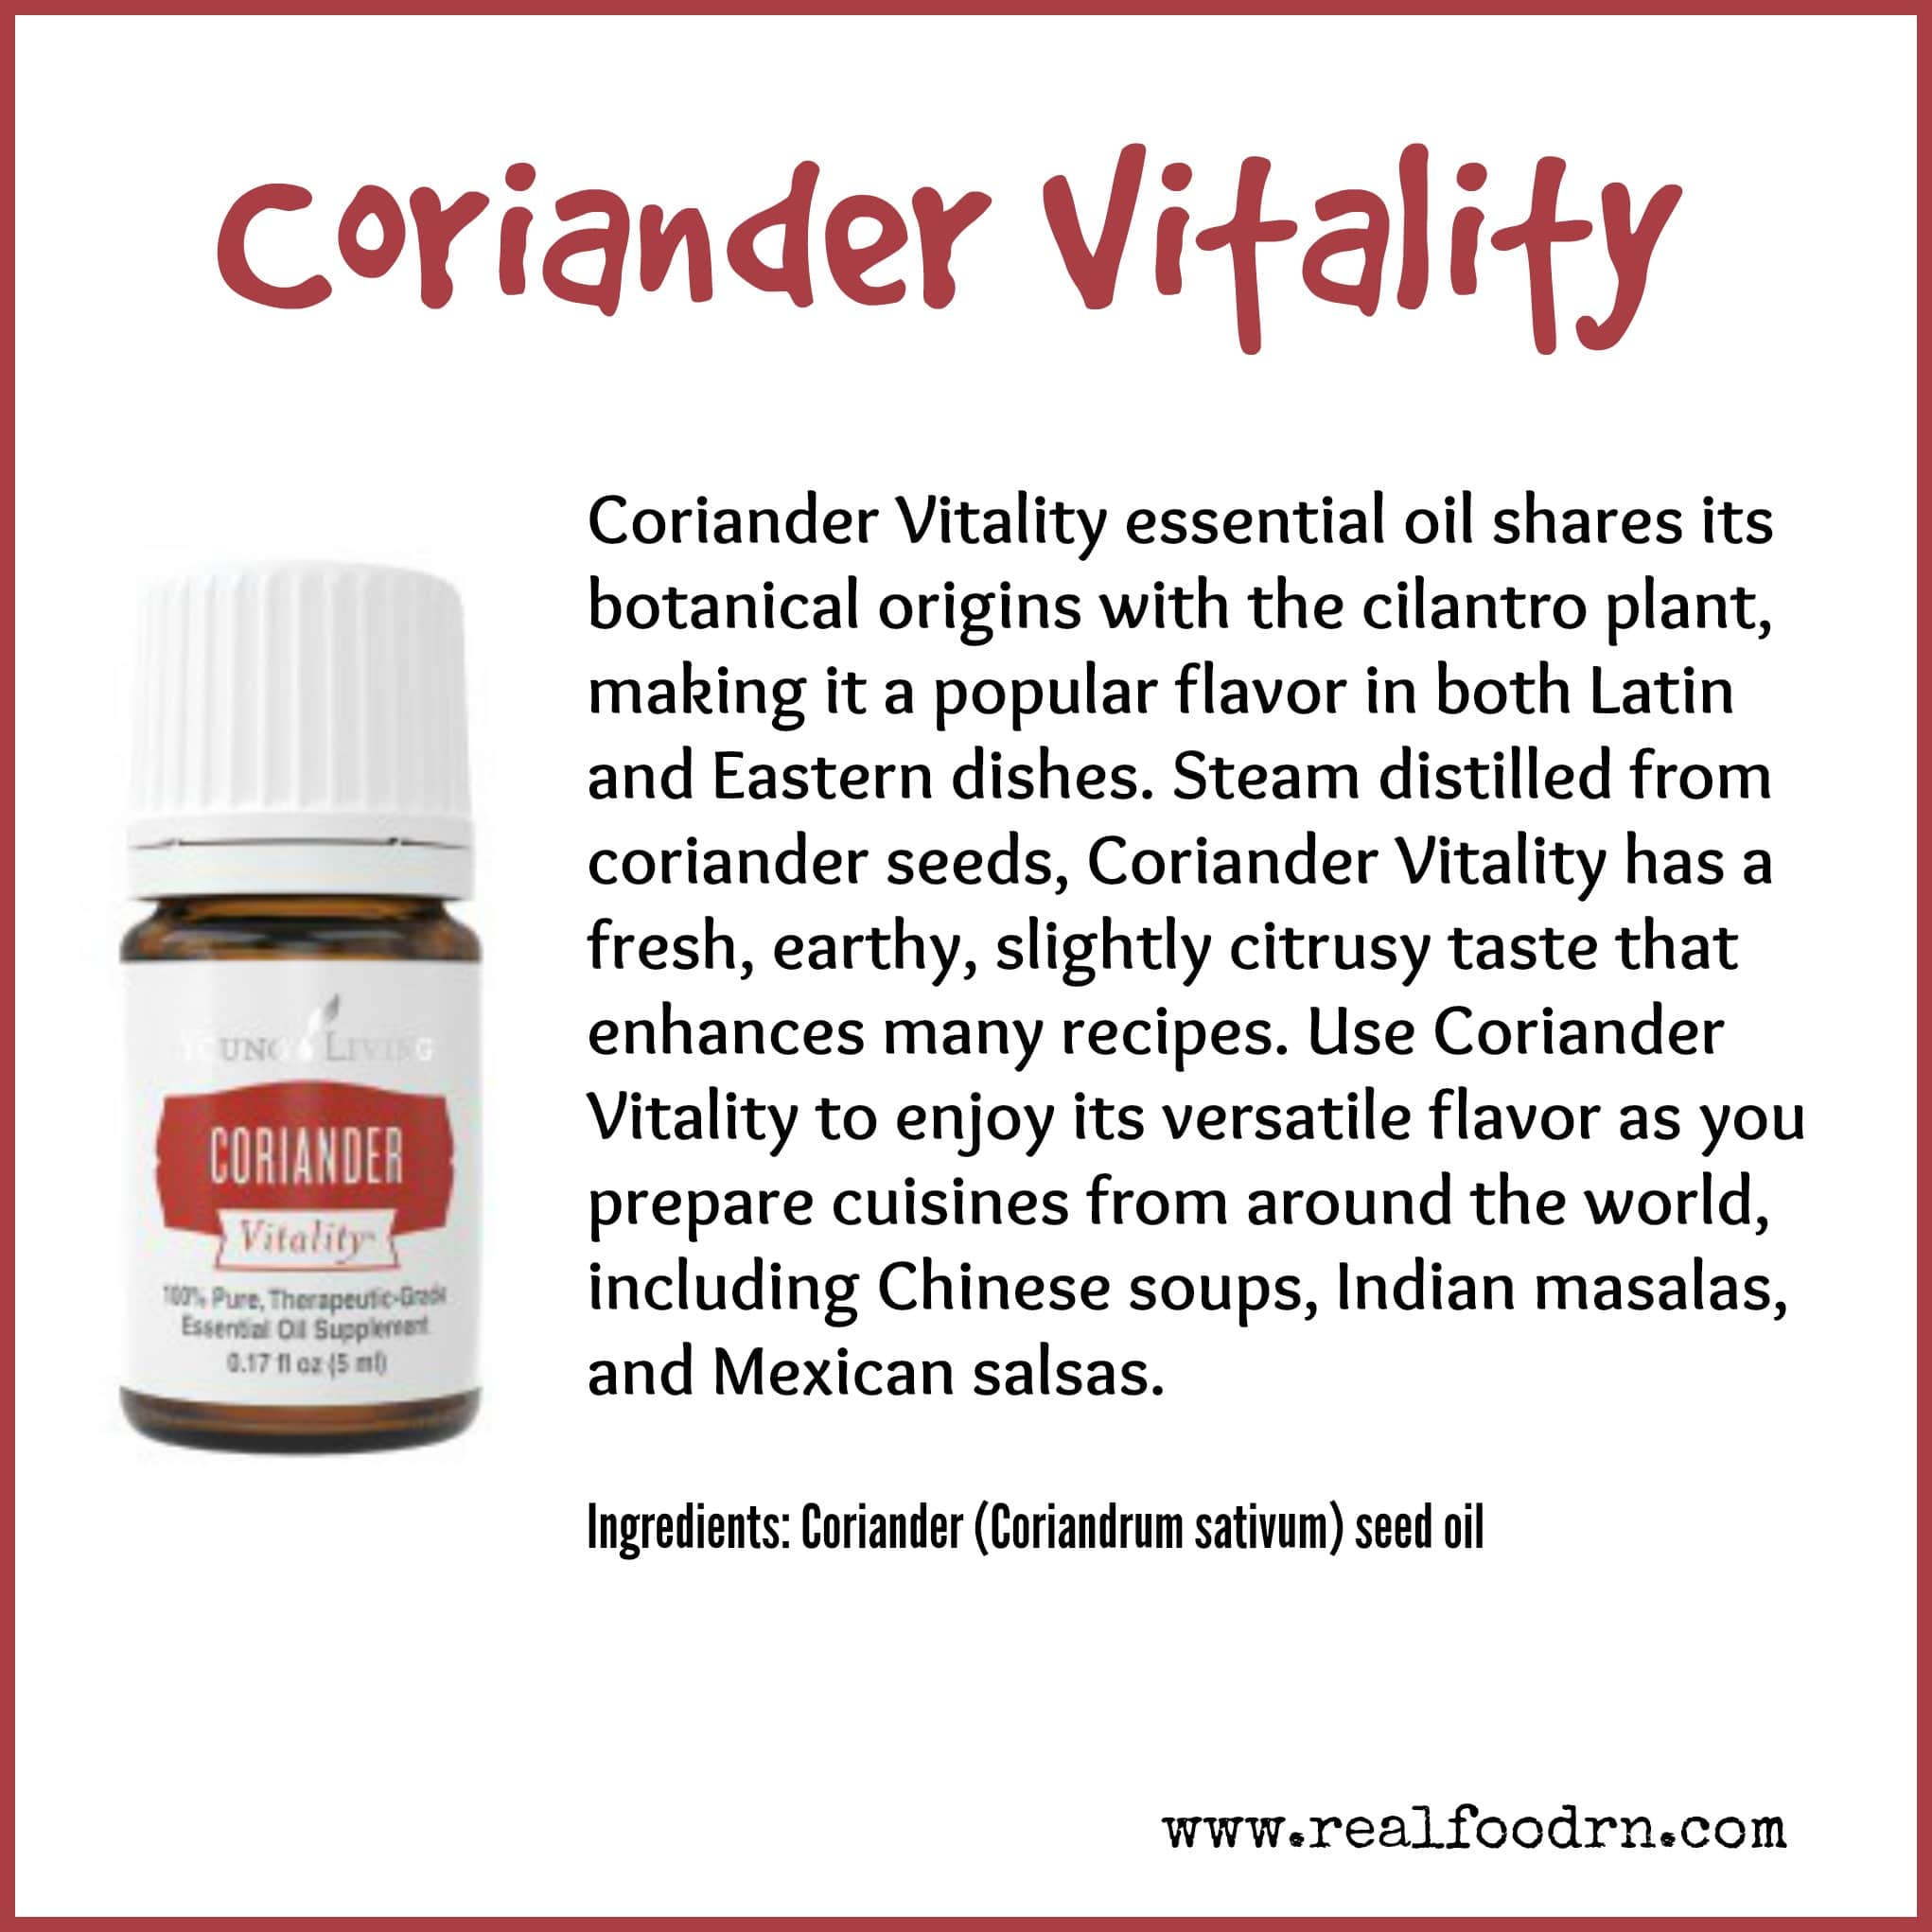 coriander vitality essential oil - real food rn